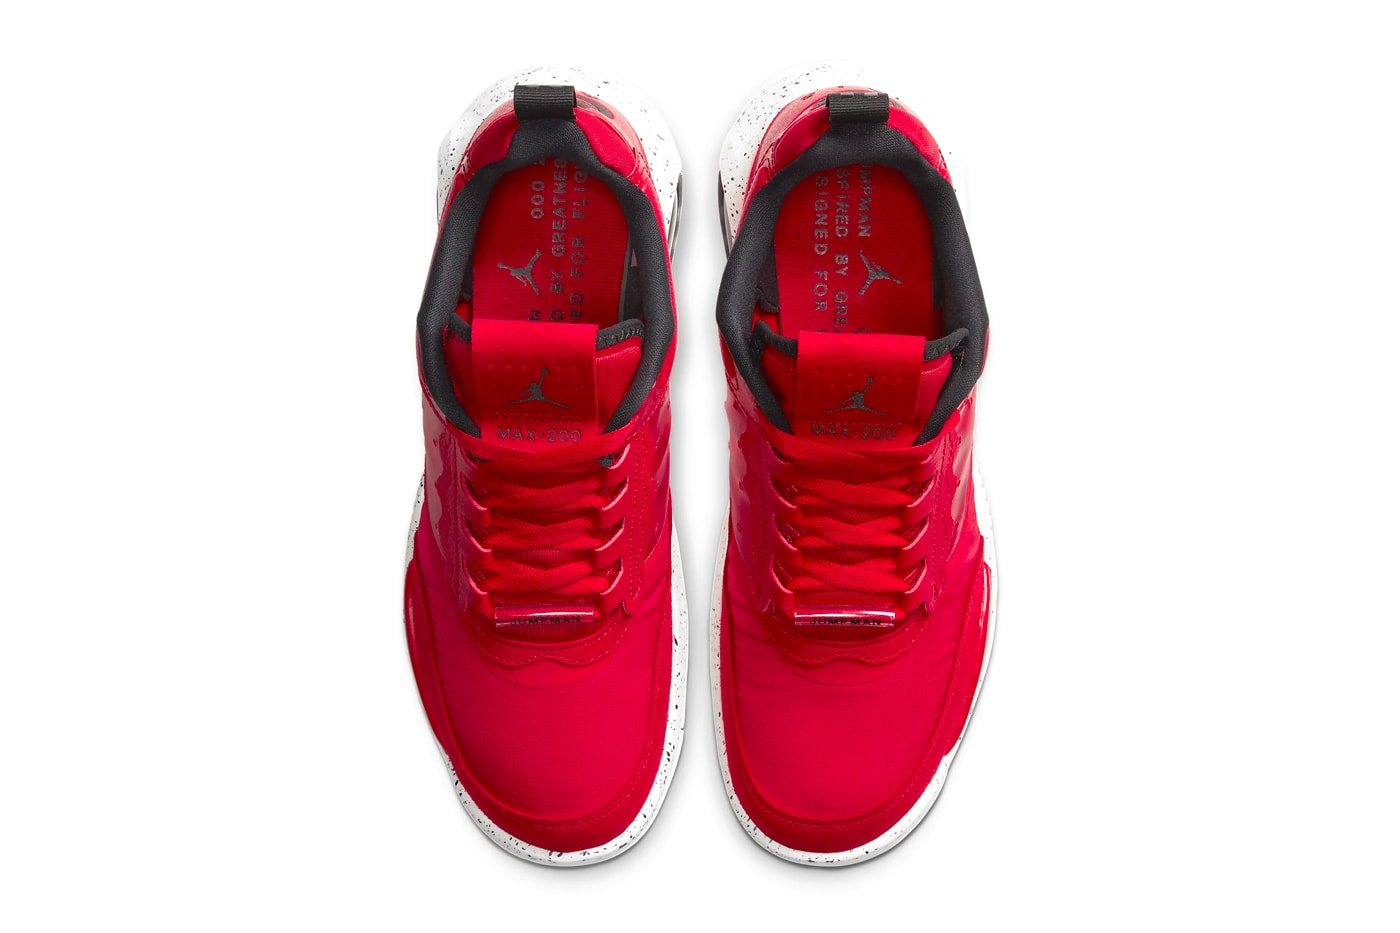 Nike Jordan Air Max 200 Fire Red Sail Black sneakers shoes footwear kicks runners trainers michael jordan 23 jumpman swoosh air unit sole Fall Winter 2019 Jordan Brand AJ4 CD6105 601